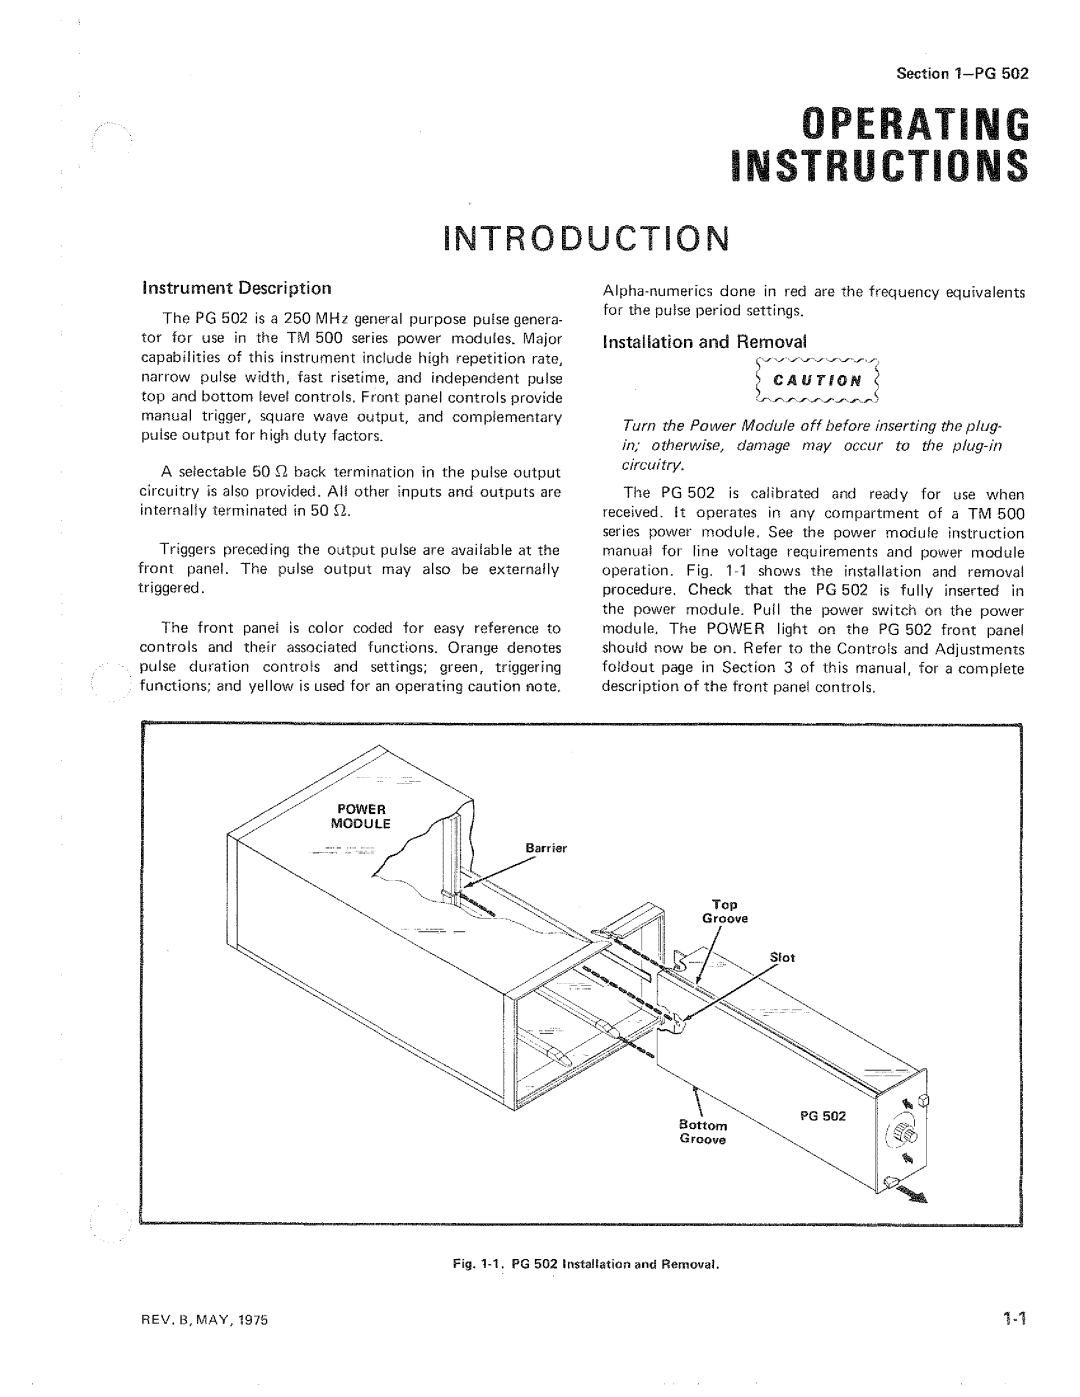 Tektronix PG 502 manual 